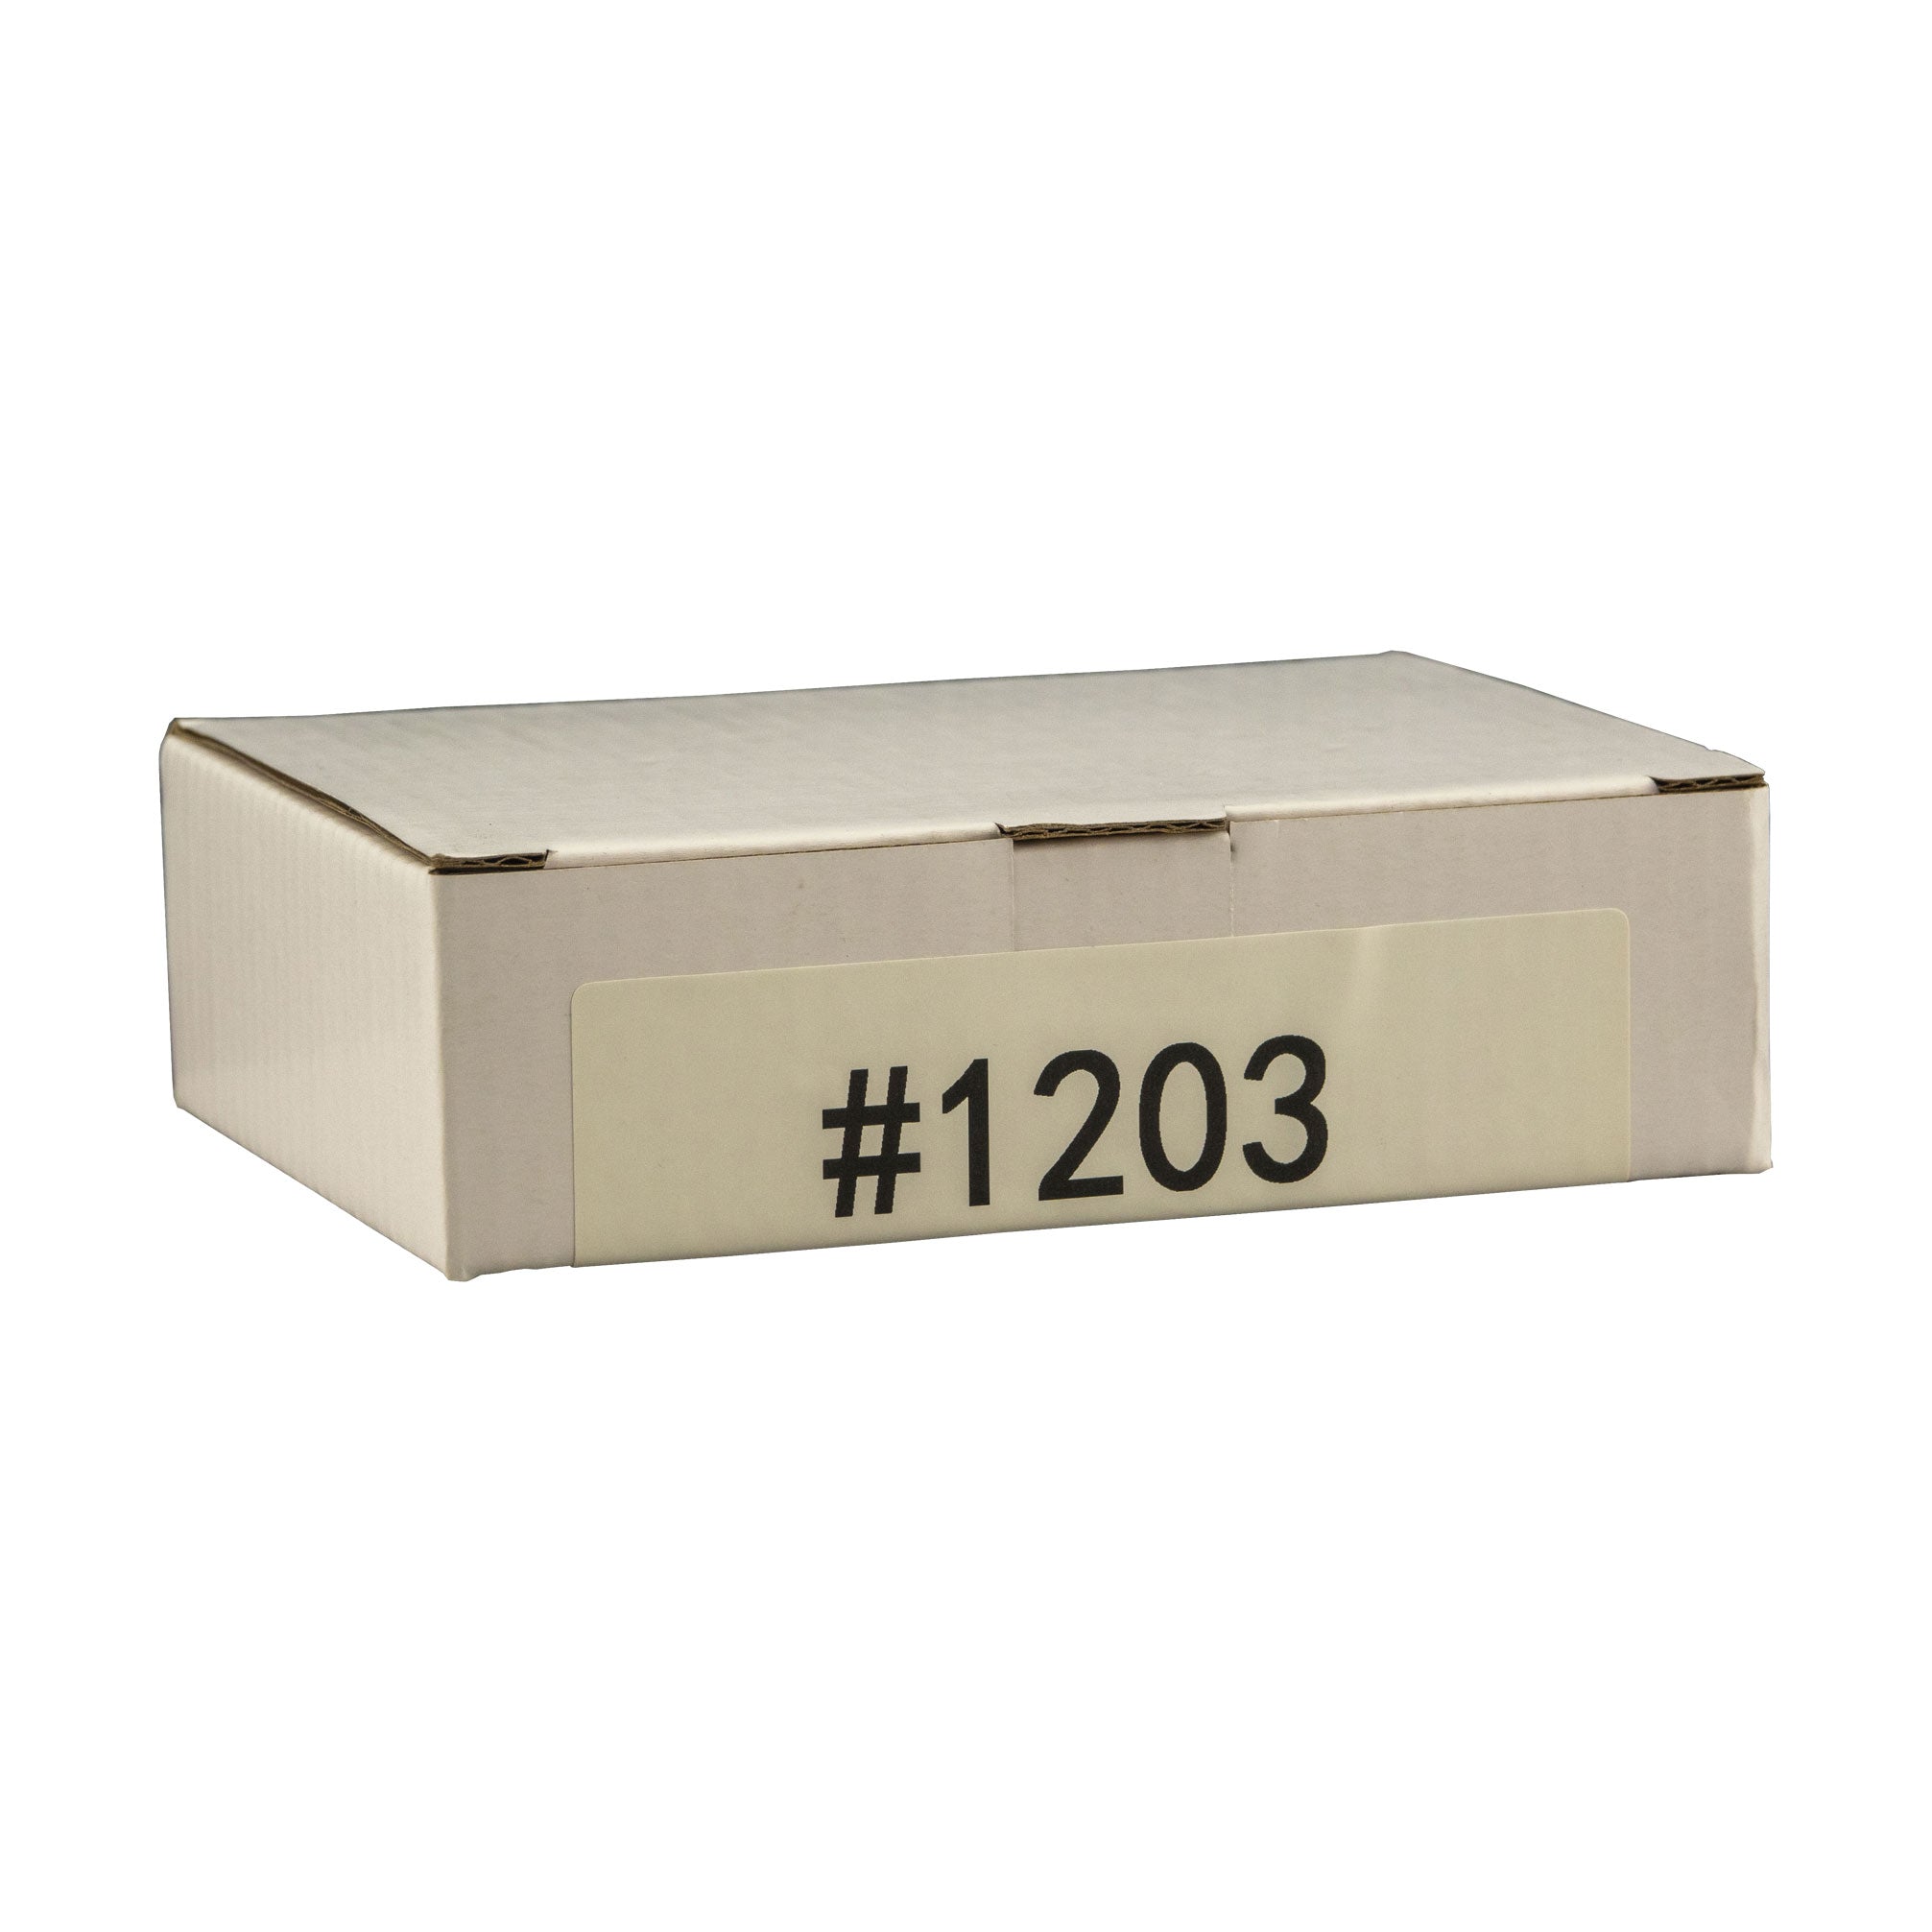 128mm x 97mm x 37mm White Carton Cardboard Shipping Box (#1203)